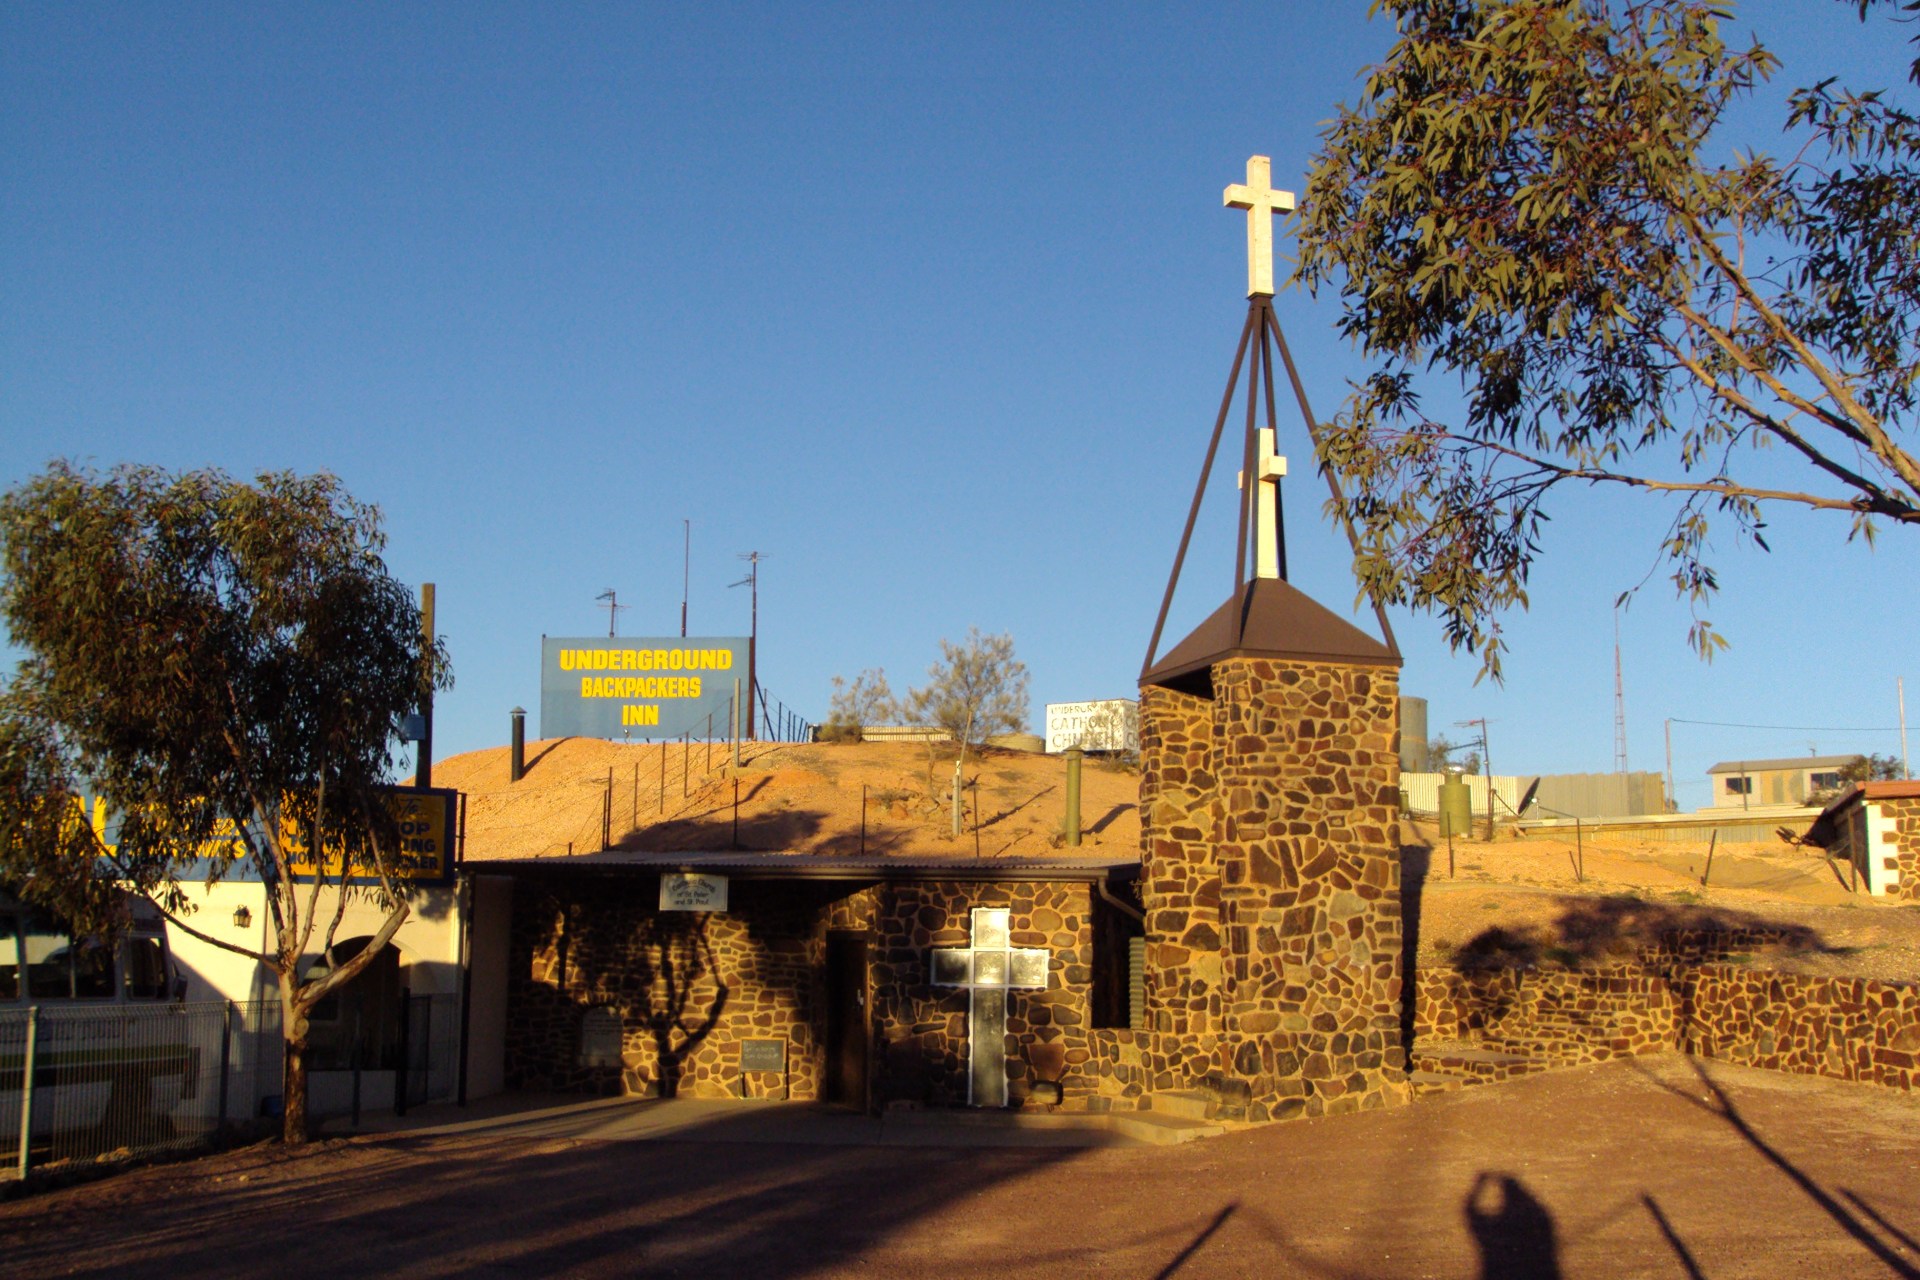 Iglesia subterránea en el desierto australiano